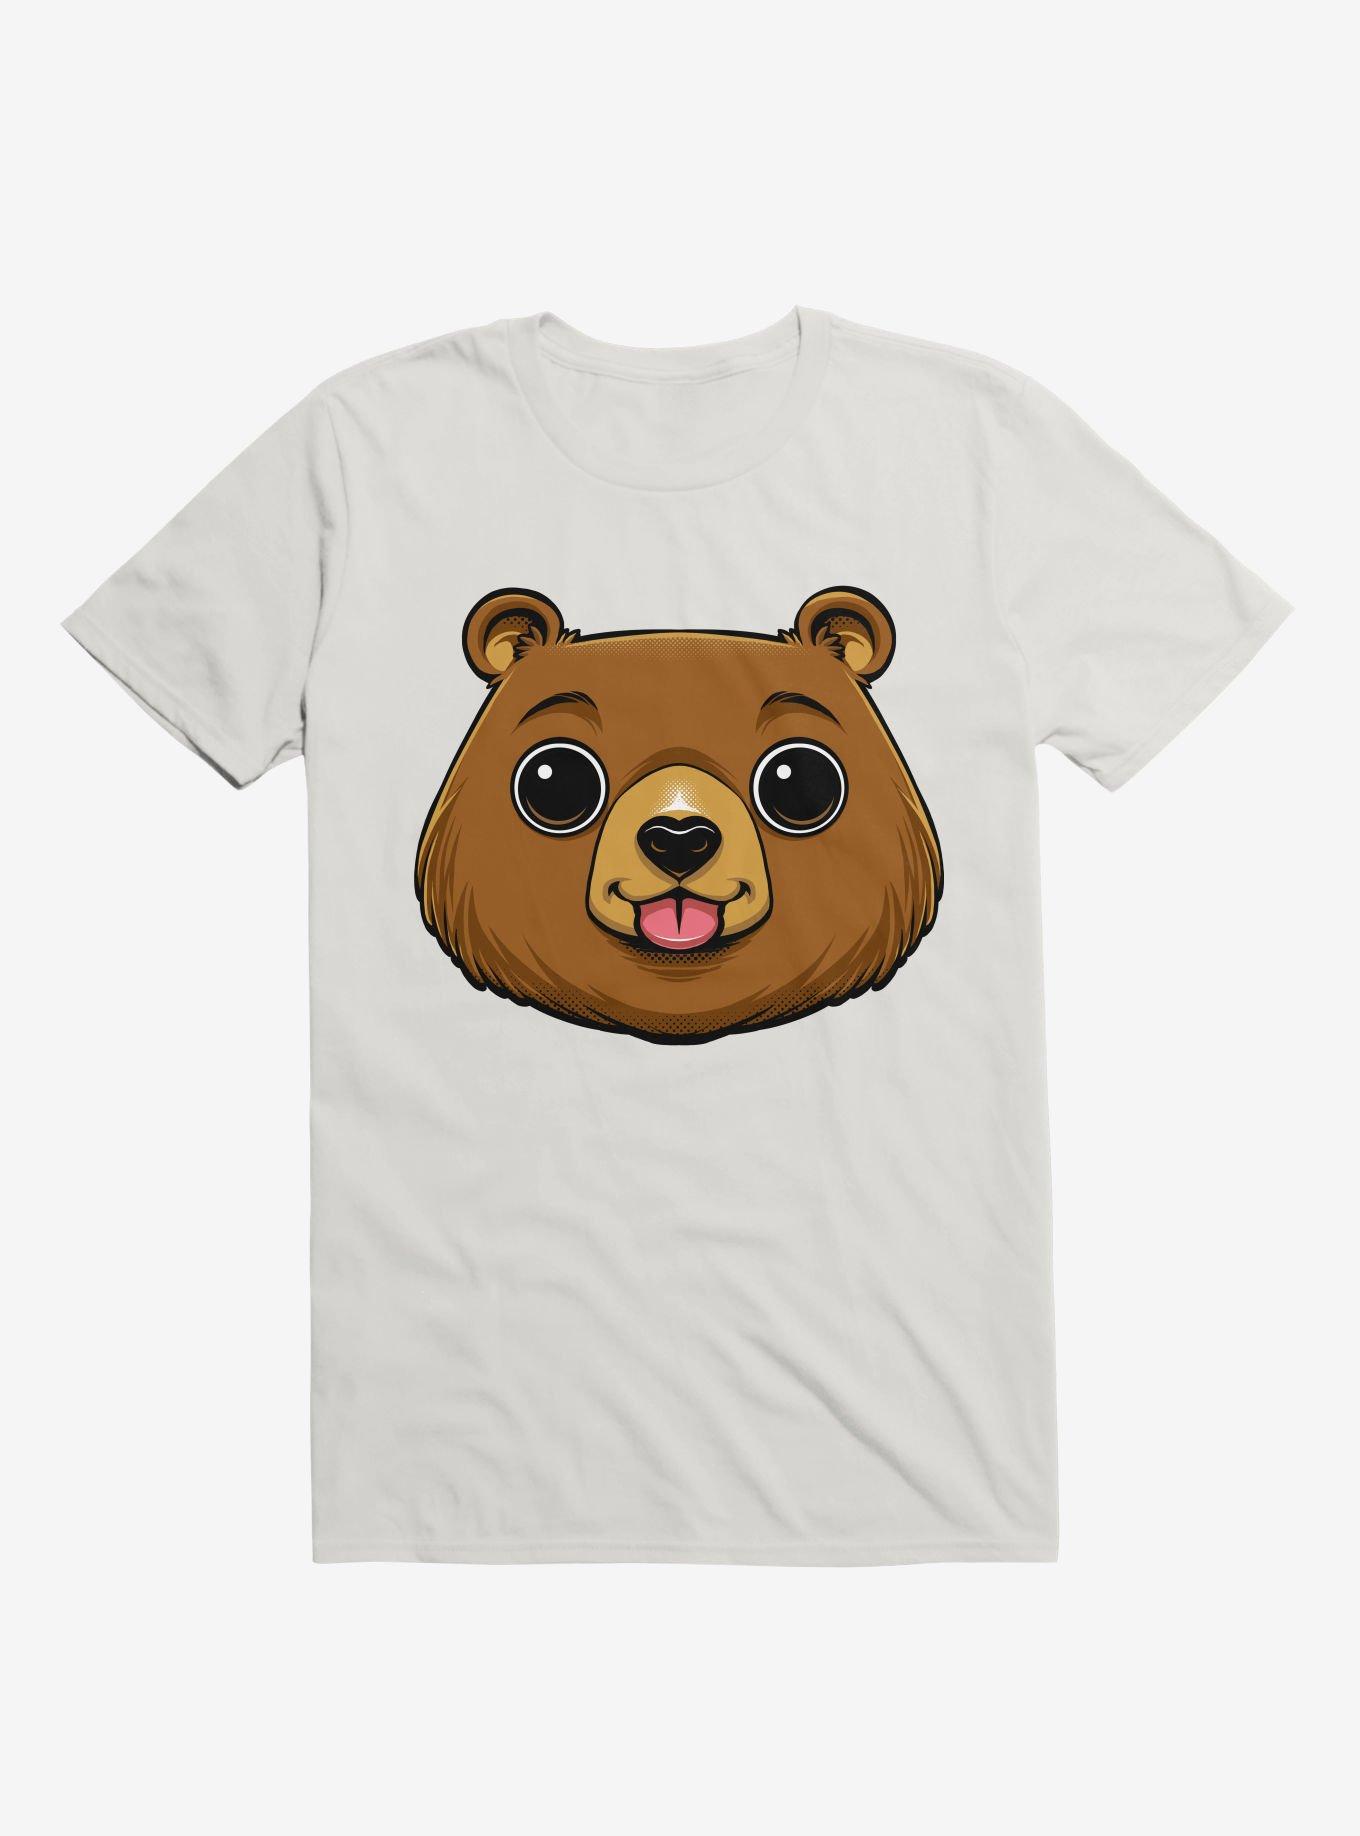 Bear Face White T-Shirt